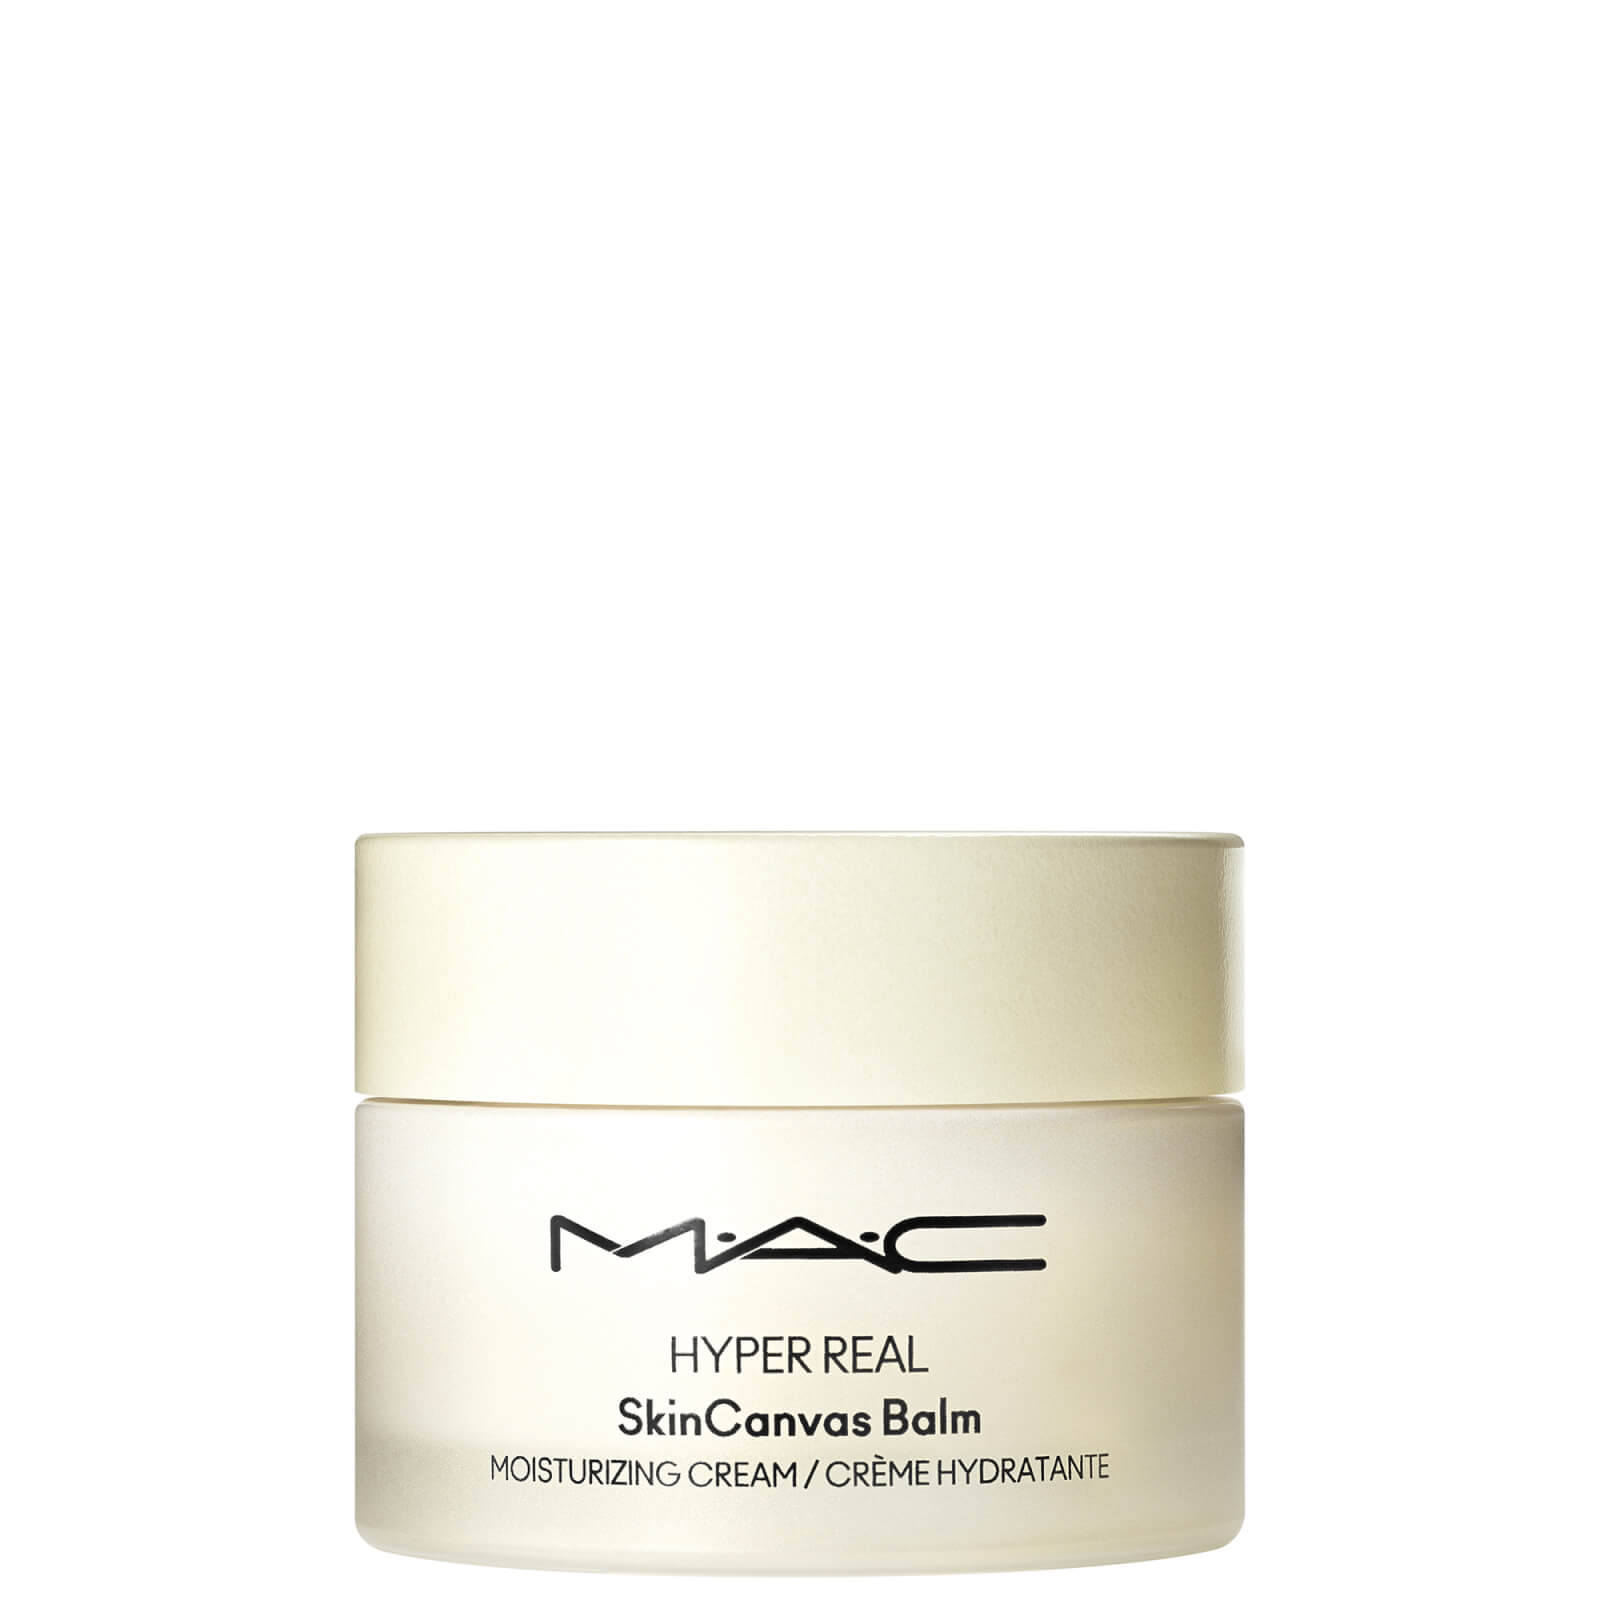 Image of MAC Hyper Real SkinCanvas BalmTM Moisturizing Cream 50ml